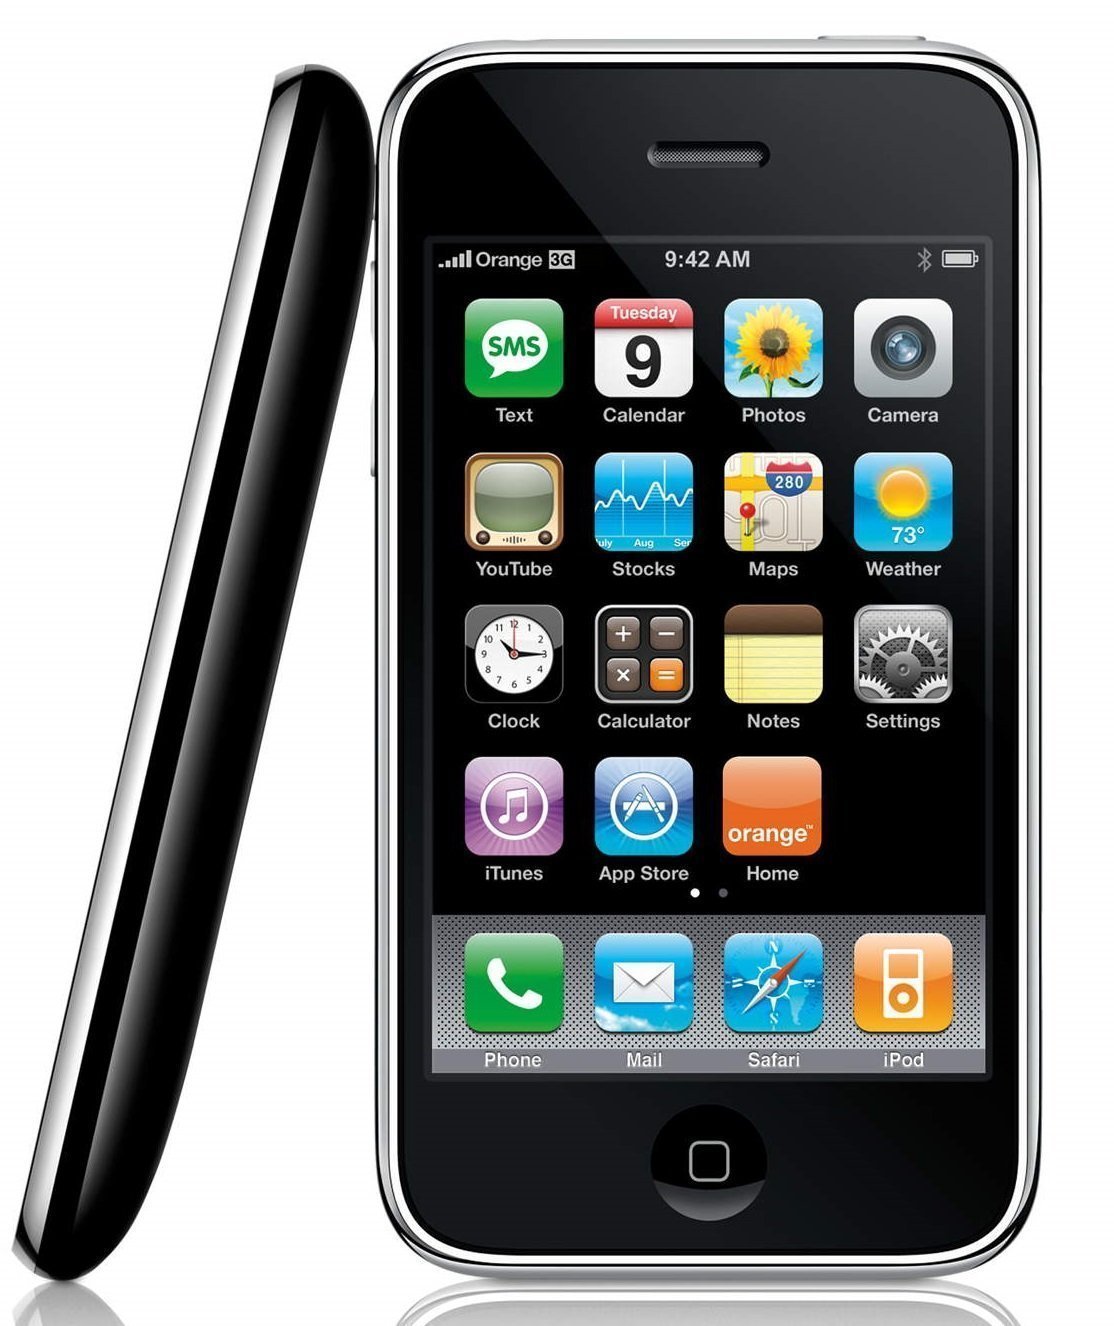  iPhone 3gs